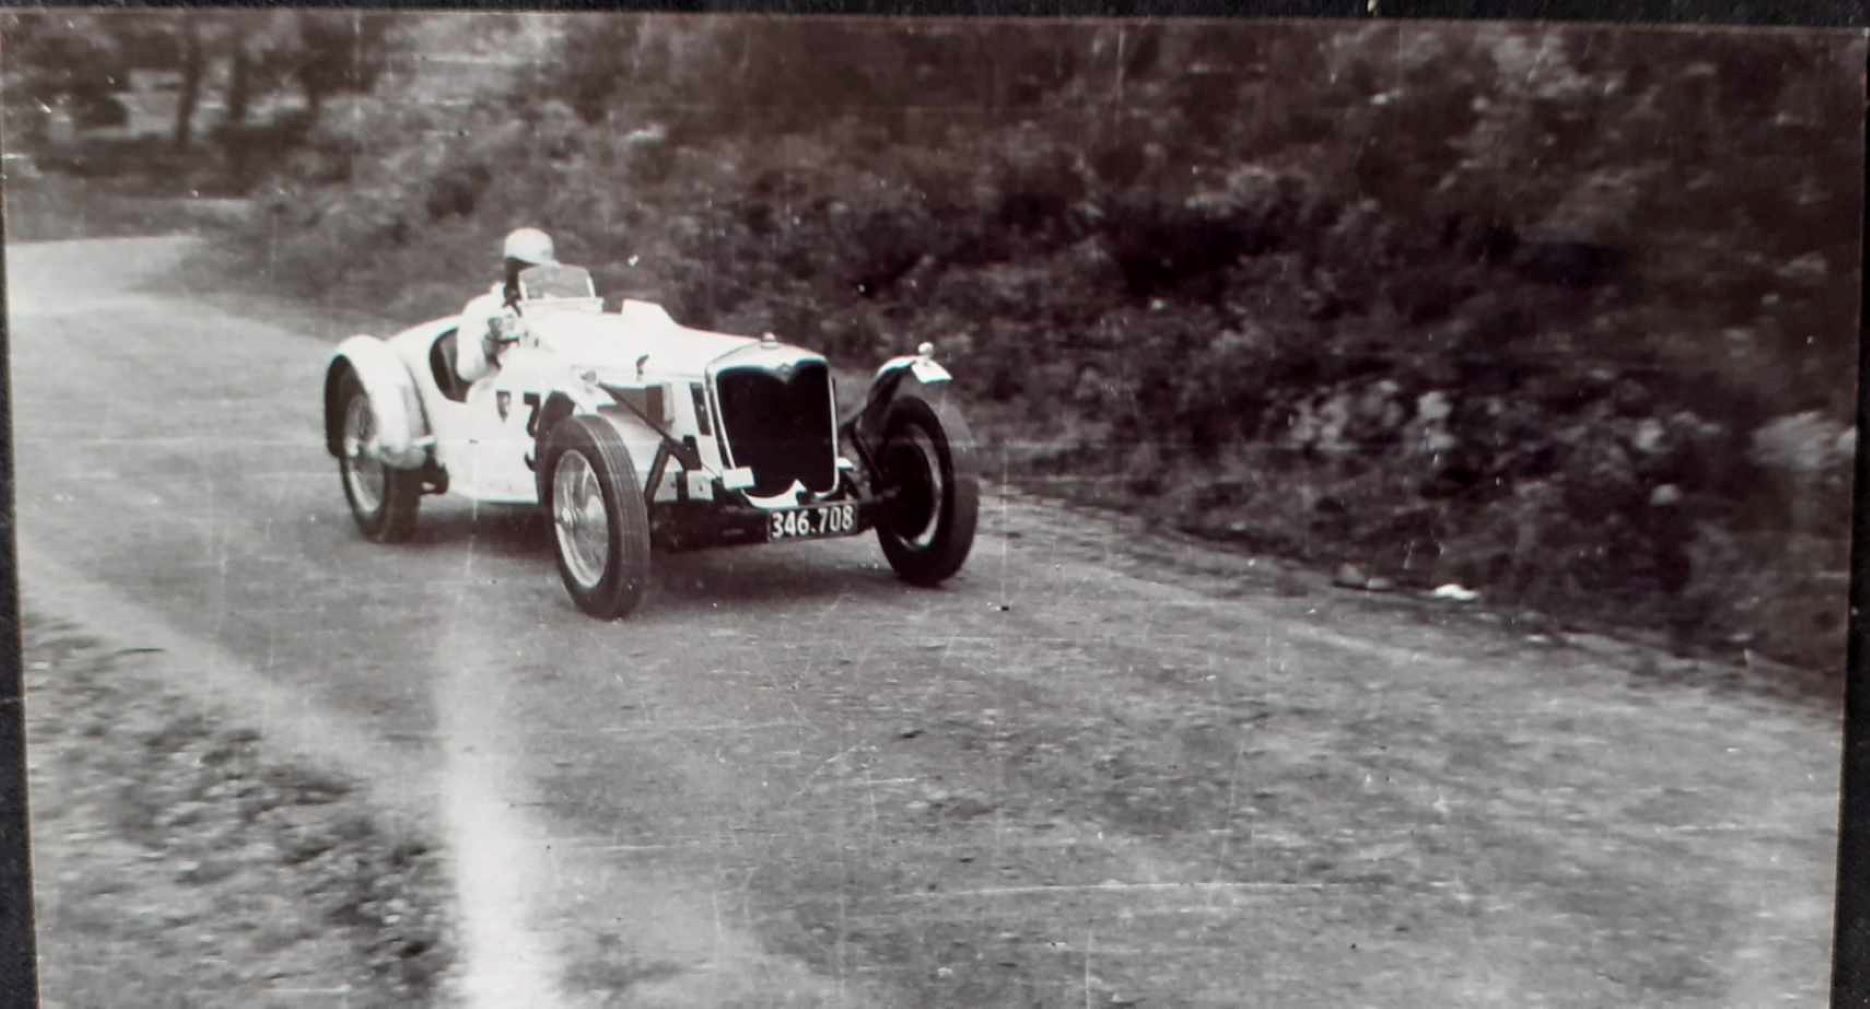 Name:  NSCC 1950 #0122 Riley Race #3 Q at Hill Climb - 346.708 1951 -56 plate 1950's - image Graeme Wel.jpg
Views: 197
Size:  178.4 KB